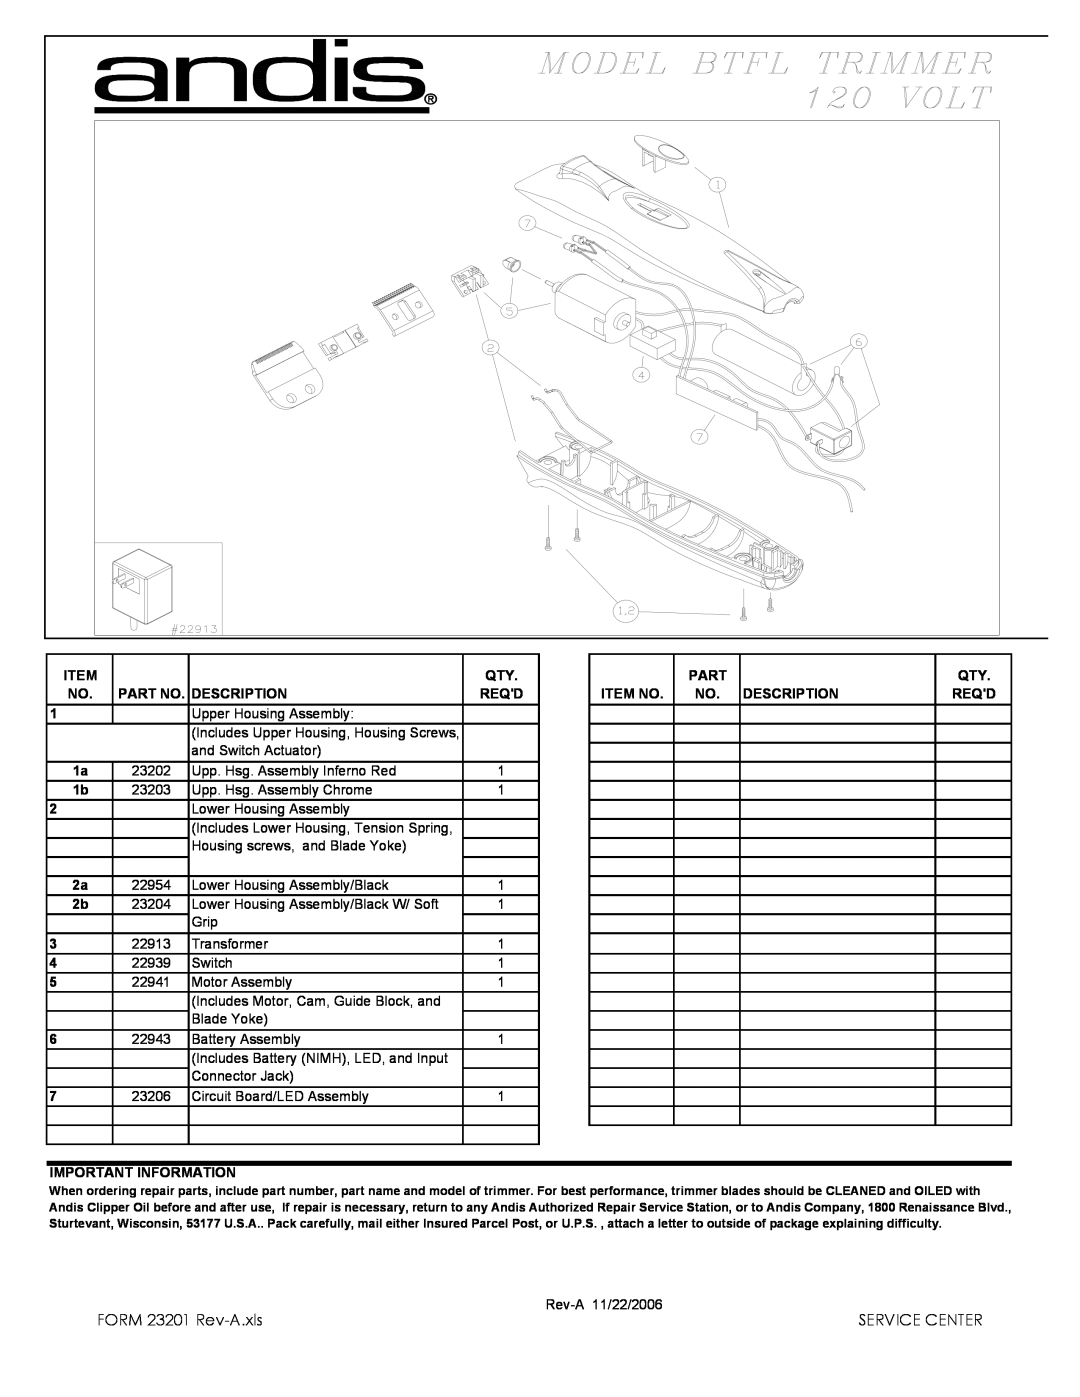 Andis Company BTFL manual FORM 23201 Rev-A.xls, Service Center, Part, Description, Reqd, Item No, Important Information 